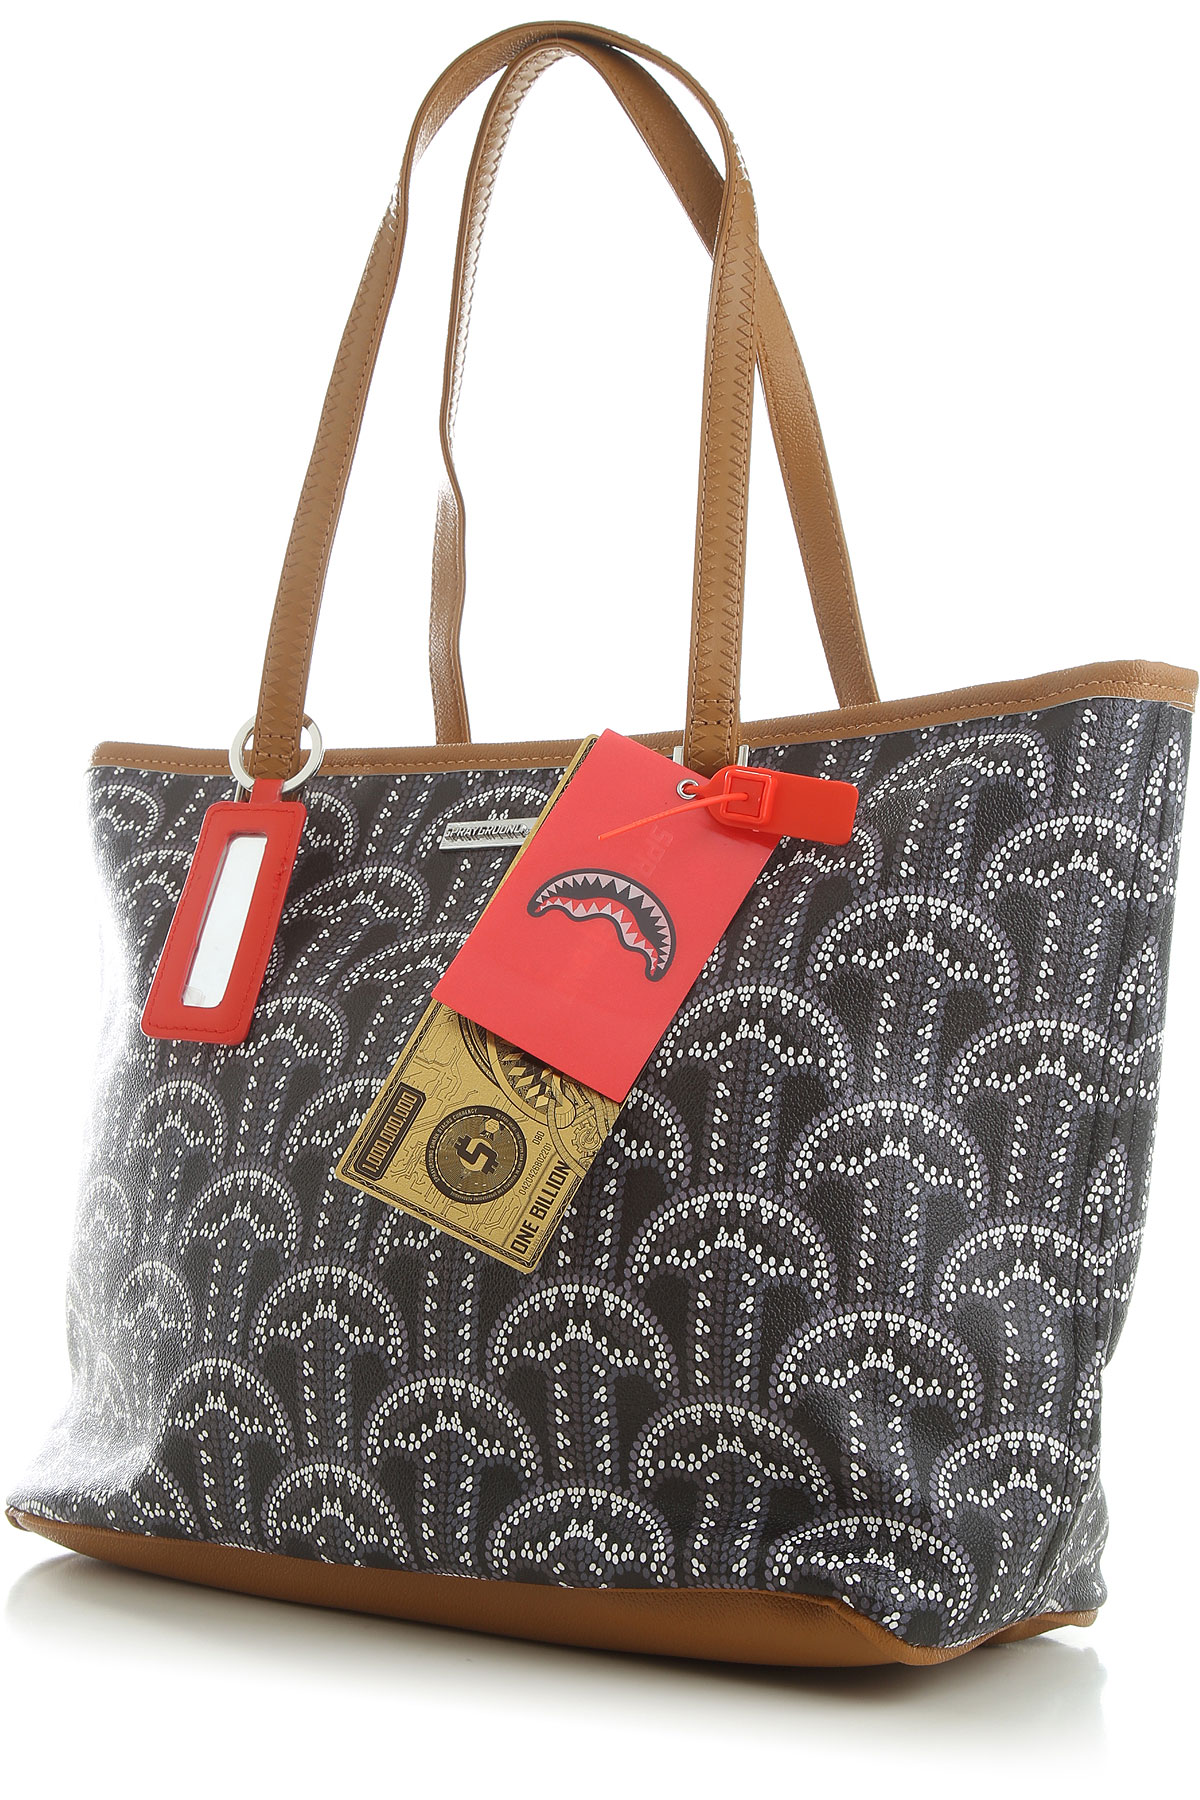 Handbags Sprayground, Style code: 910t4039nsz